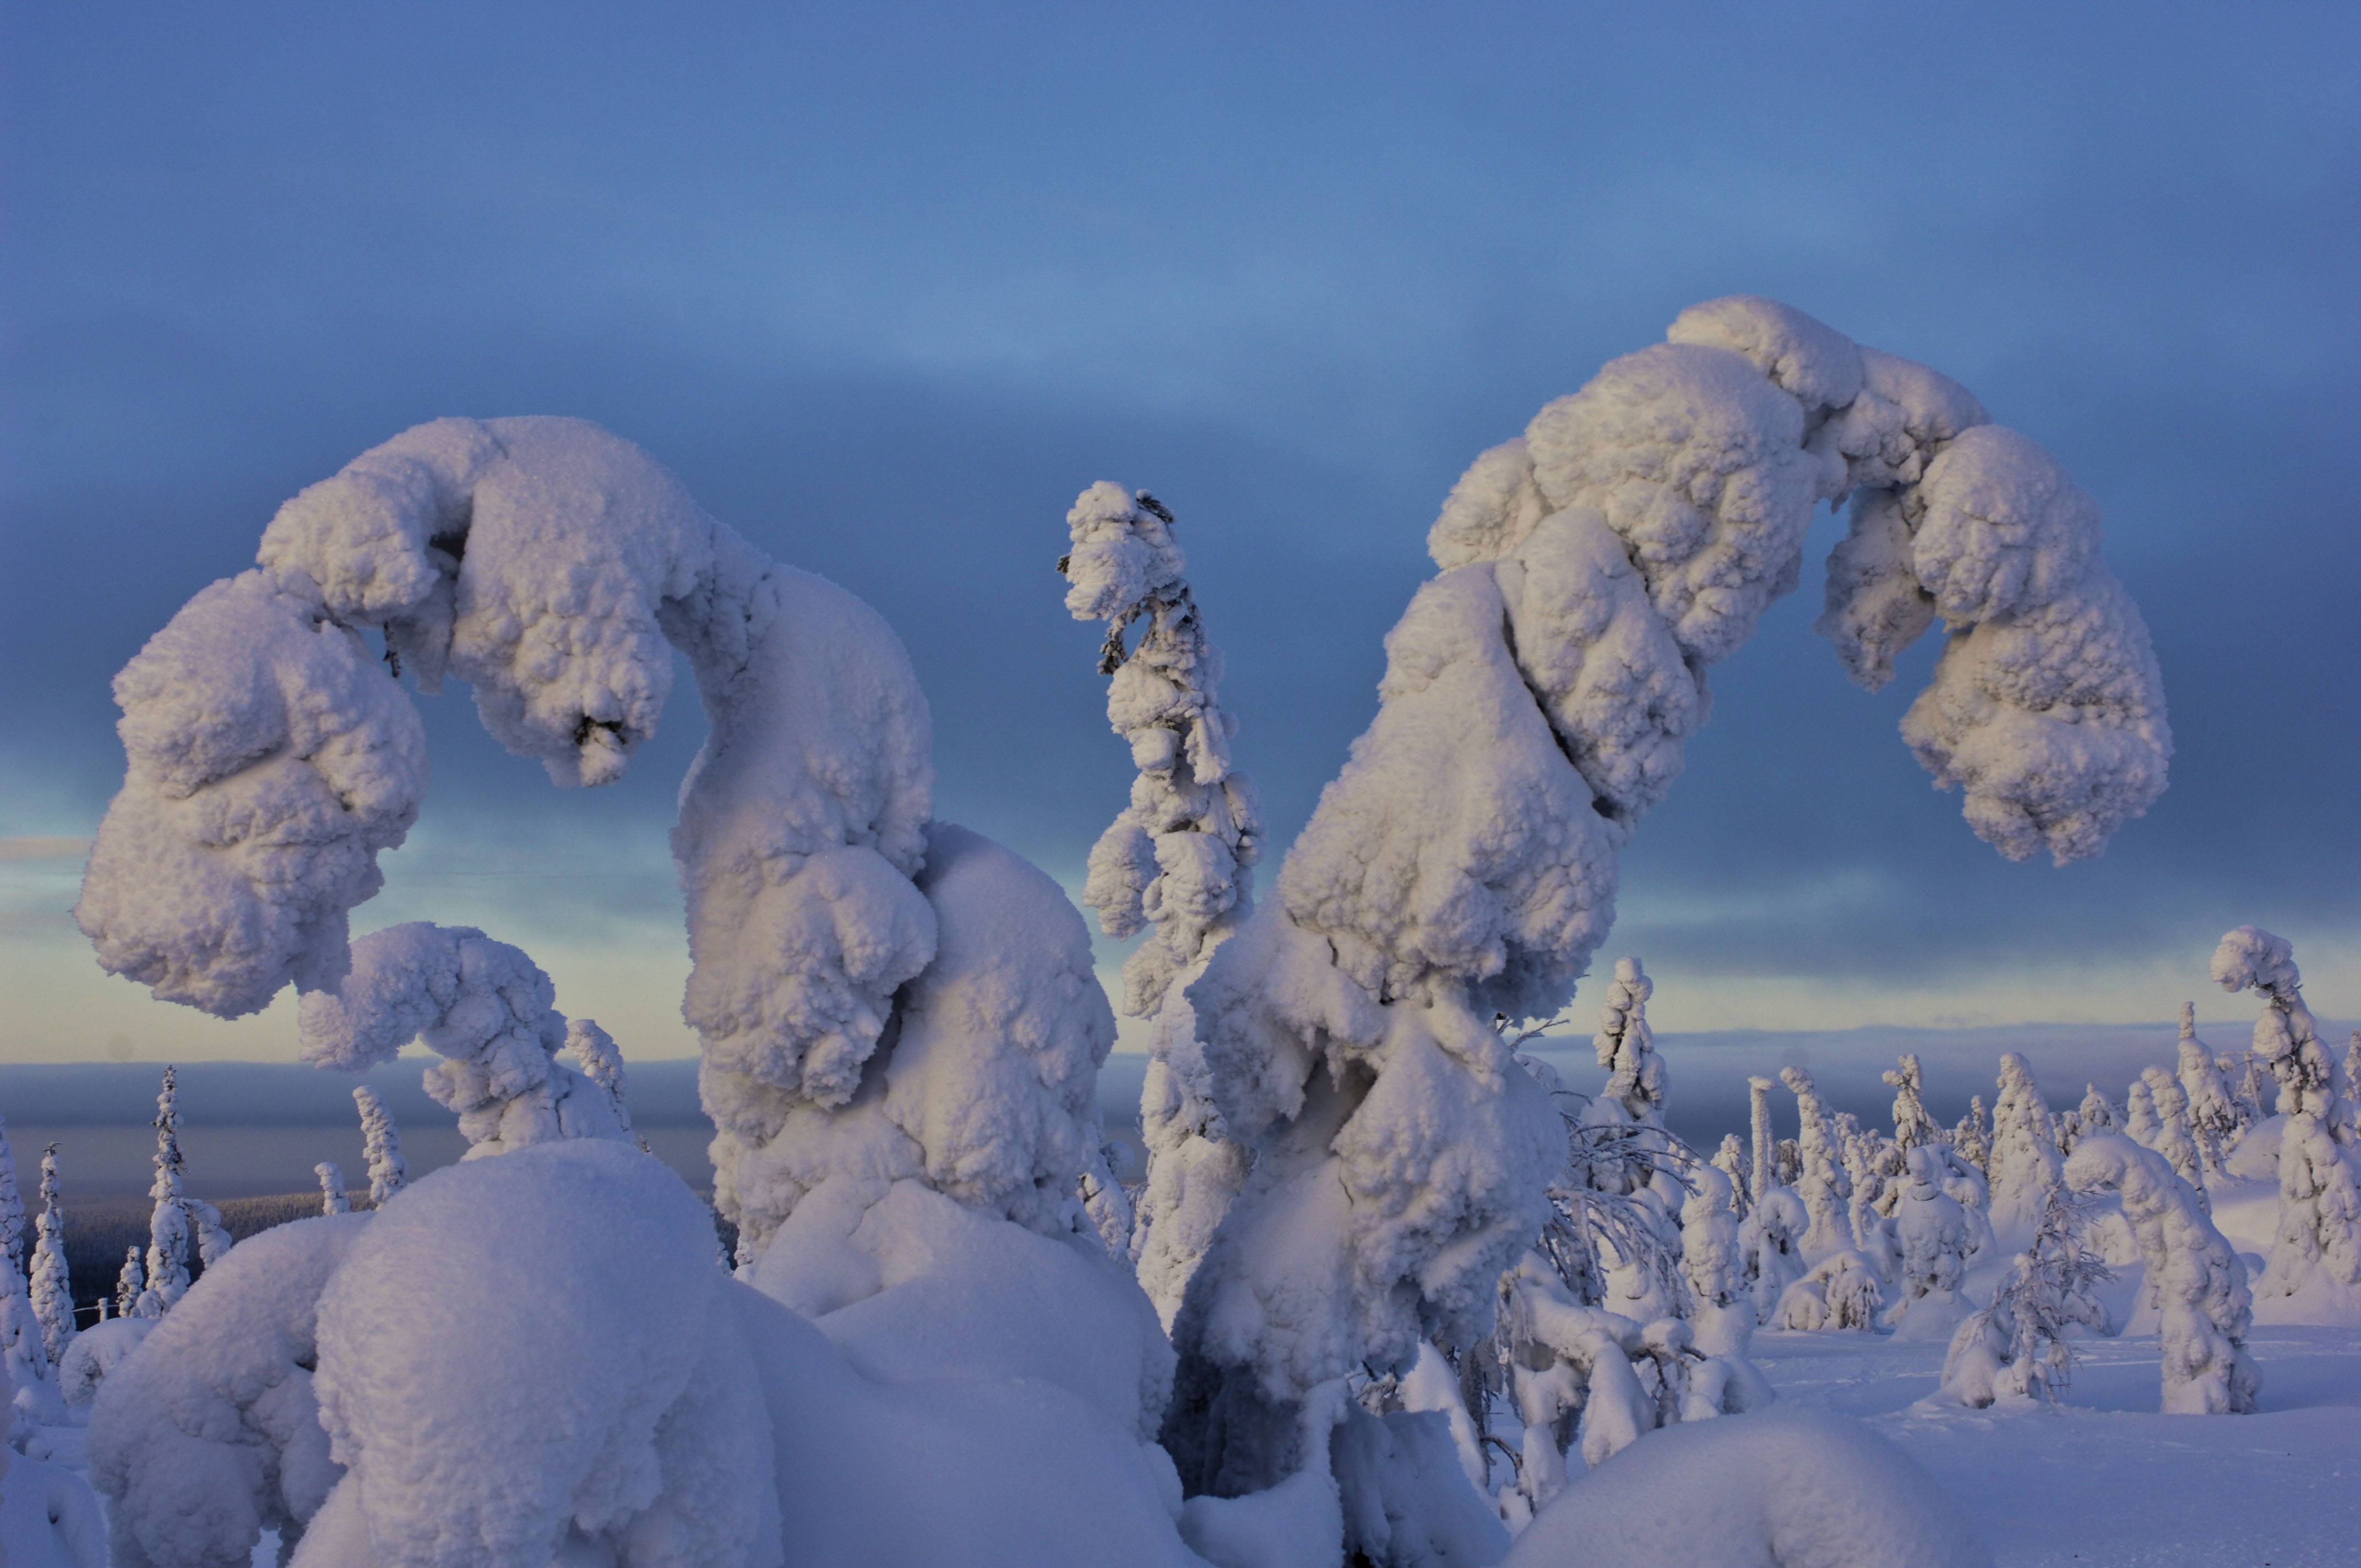 Syöte National Park, Finland